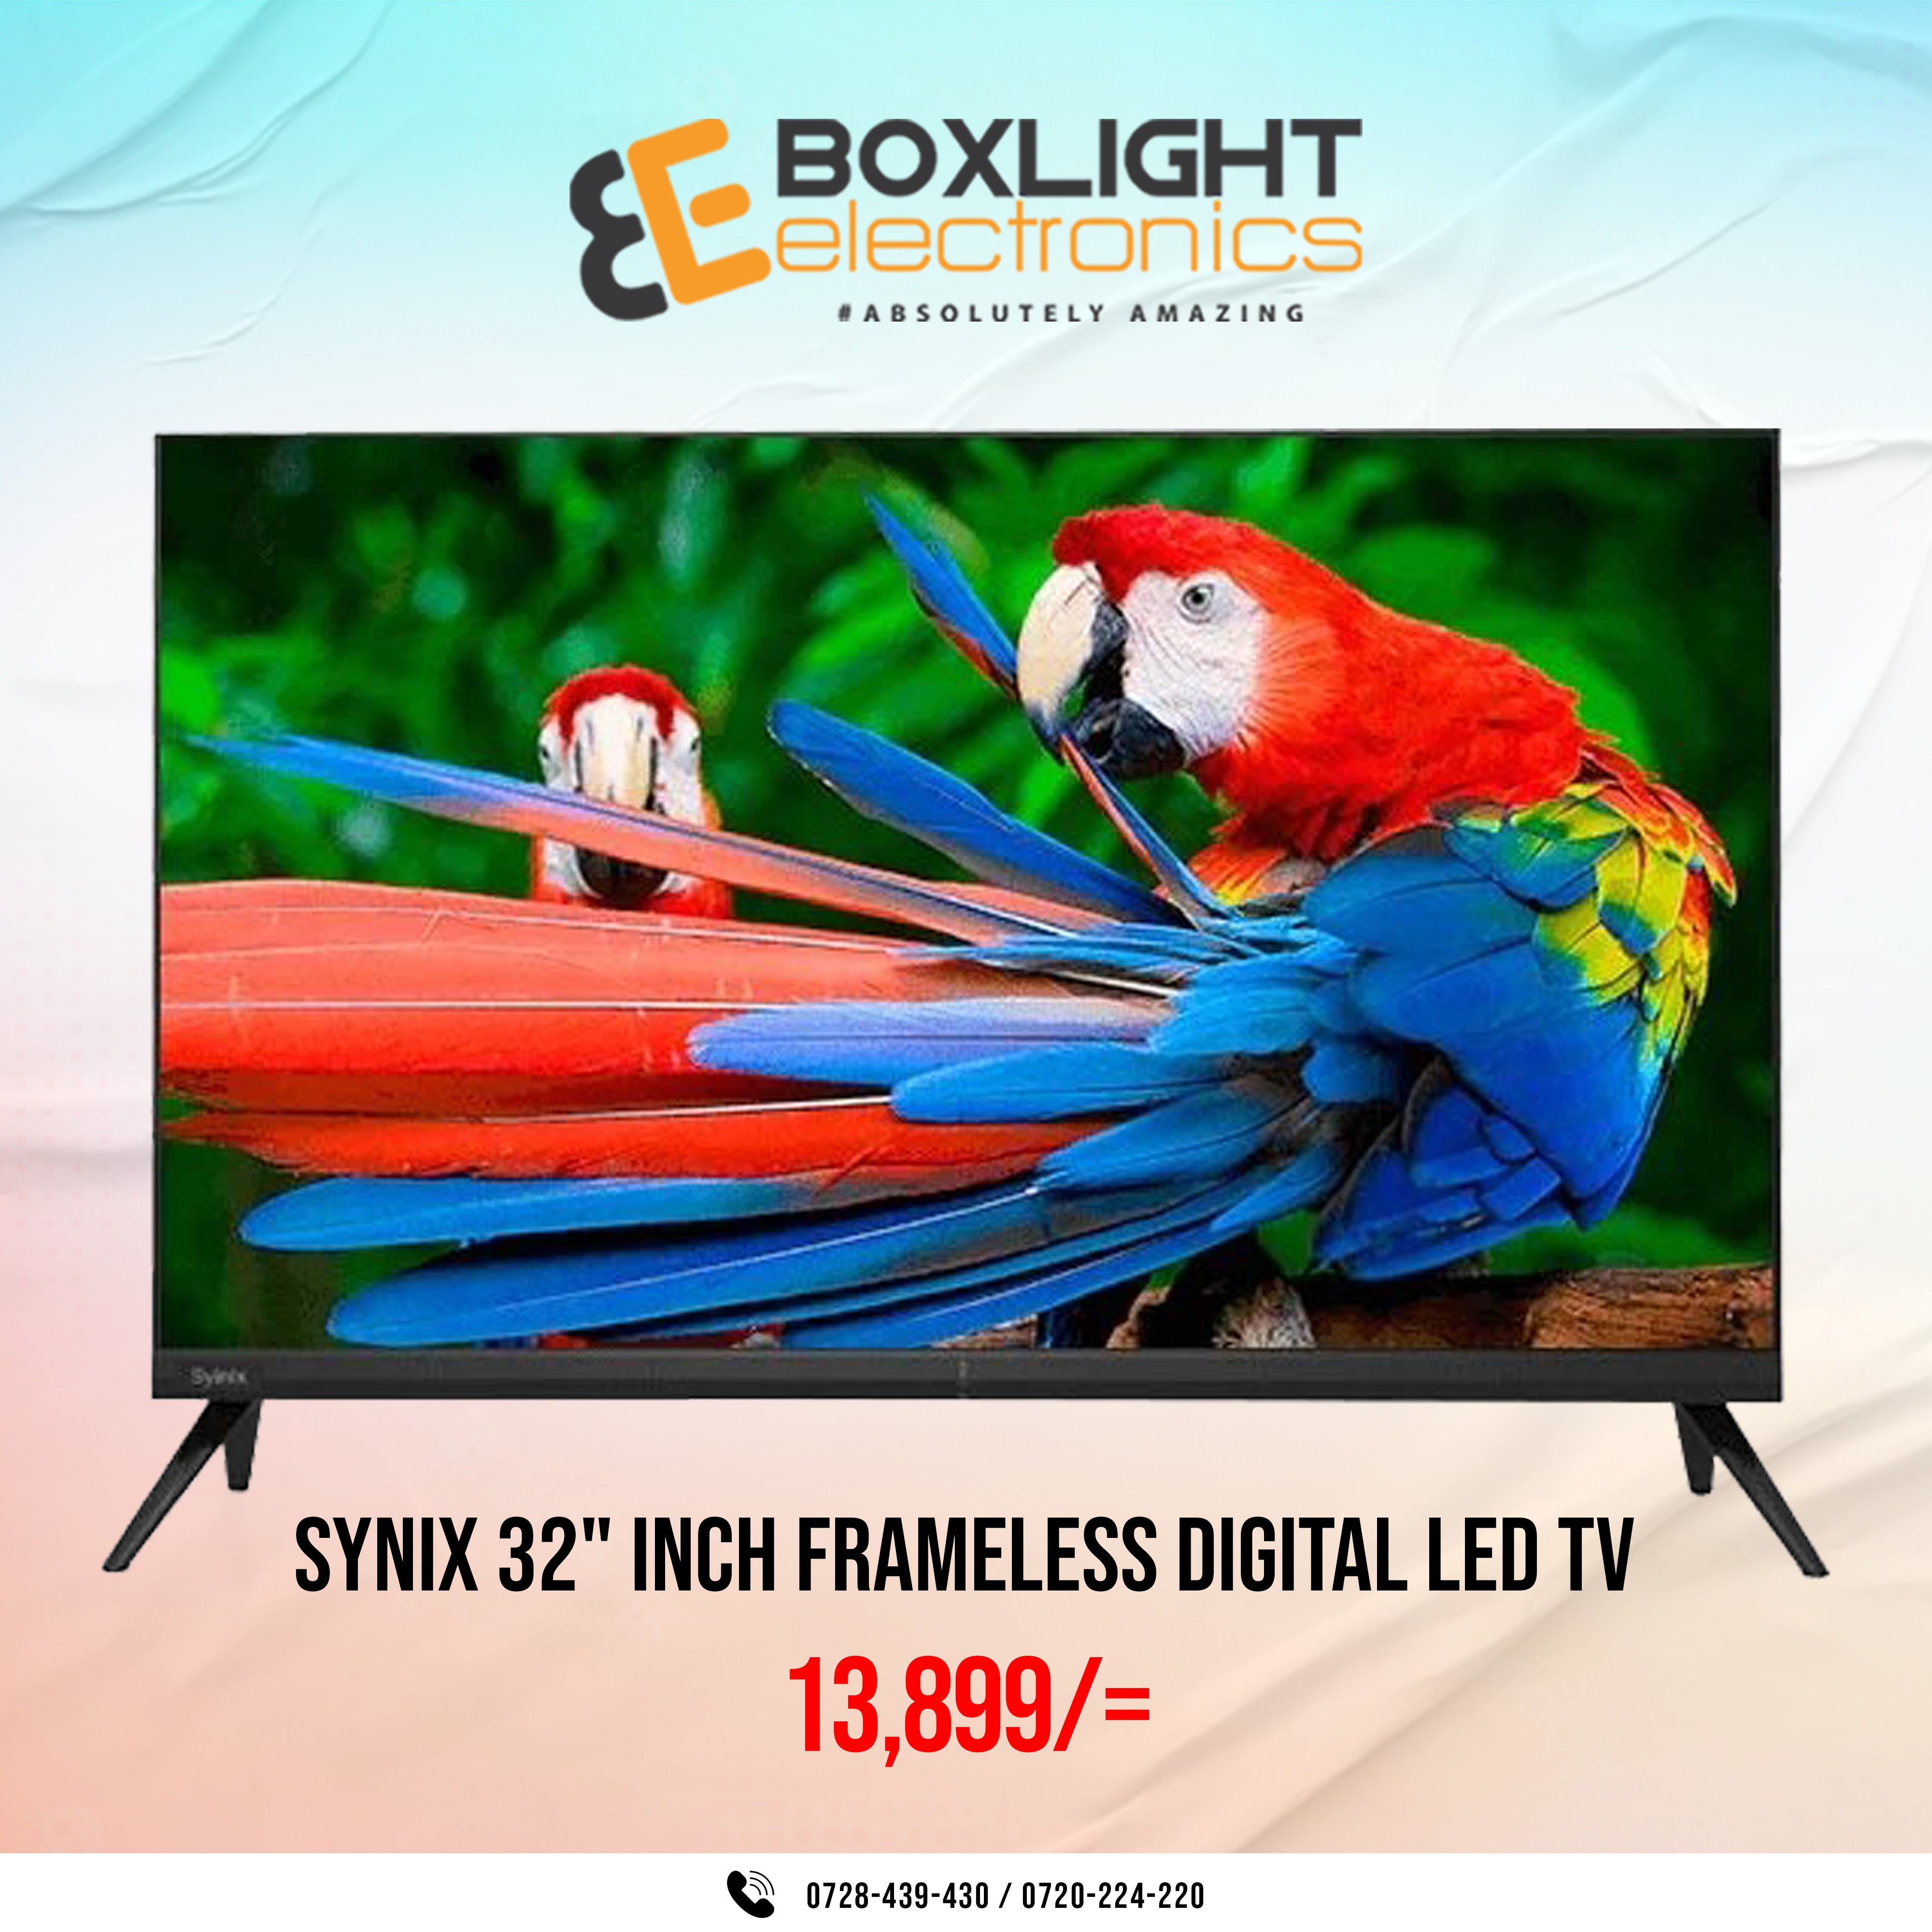 Synix 32" Inch Frameless Digital LED TV, I-CAST TV